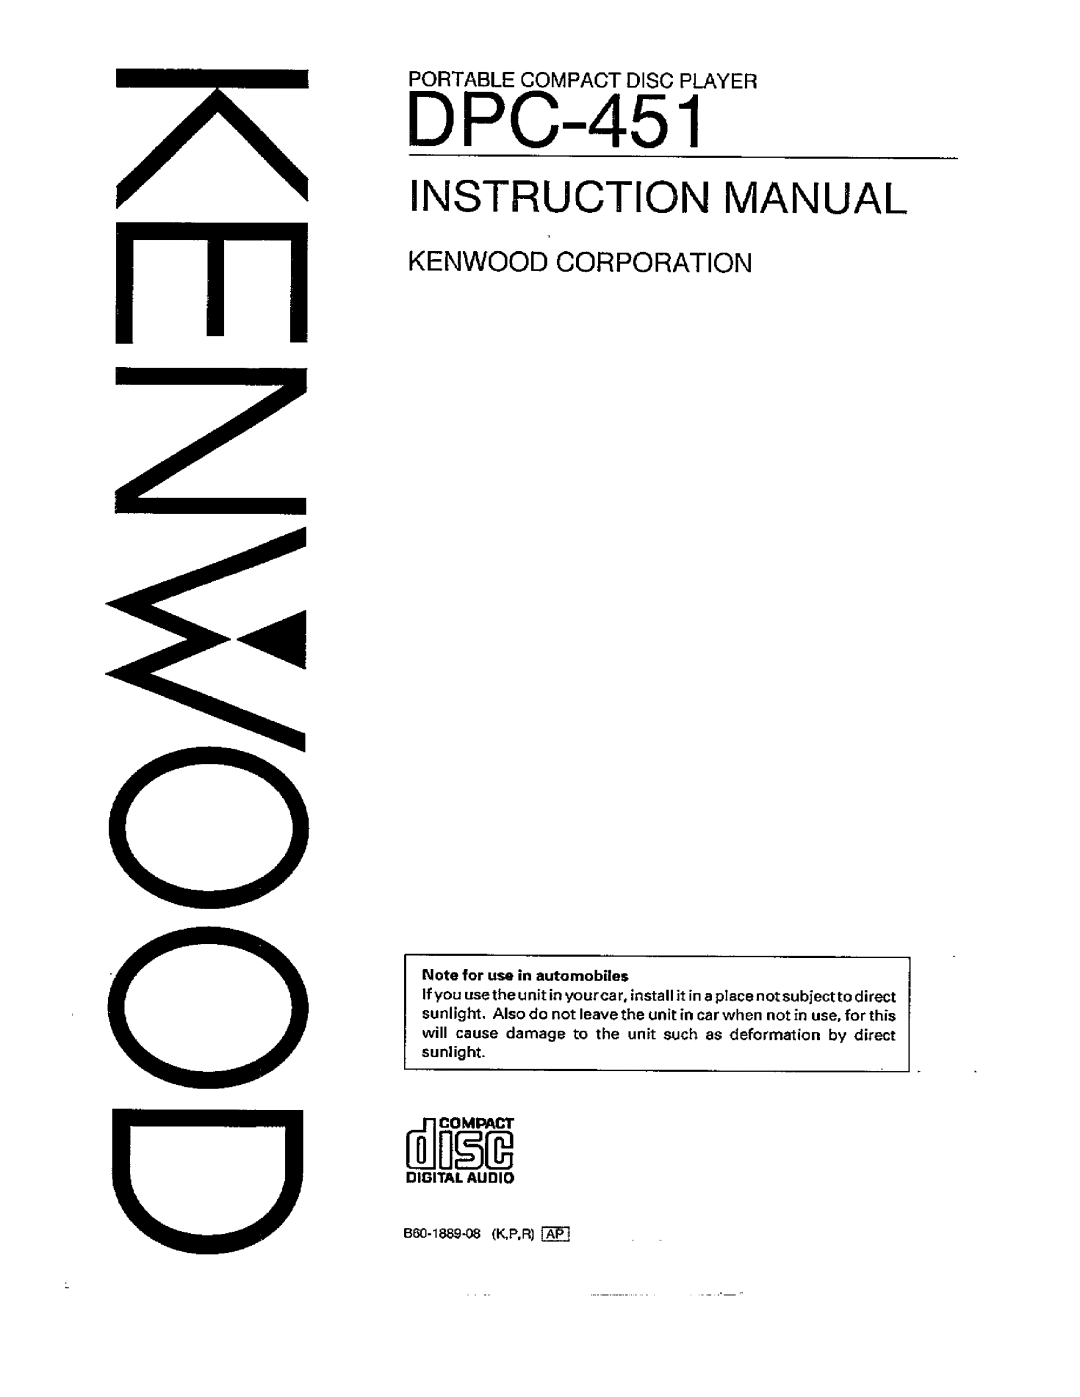 Kenwood DPC-451 manual 